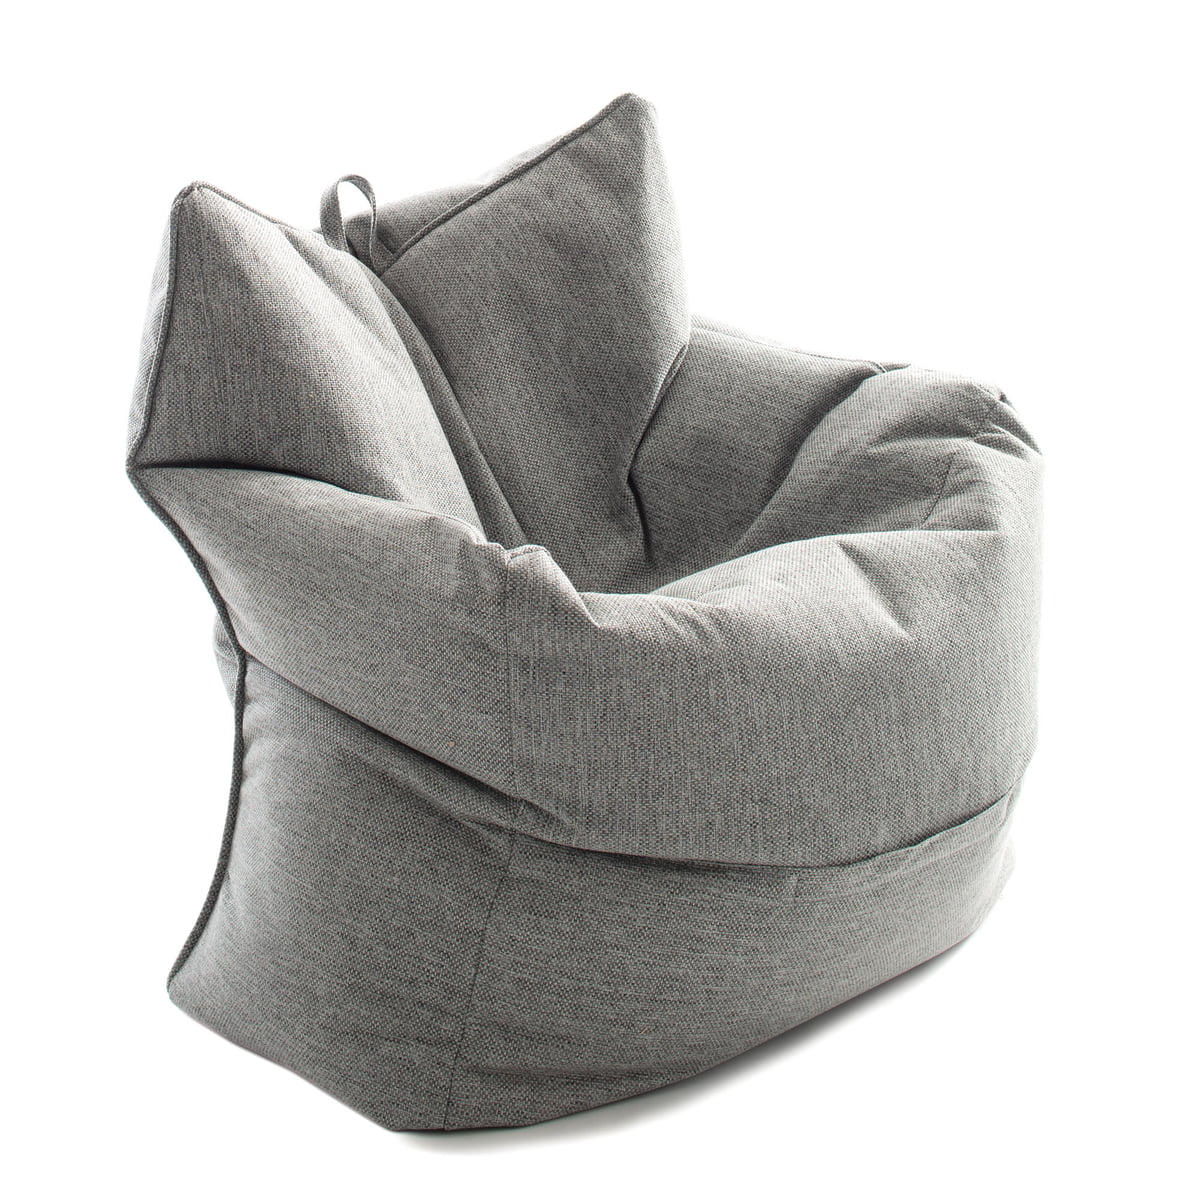 Sitting Bull - Multi fauteuil XL, gris